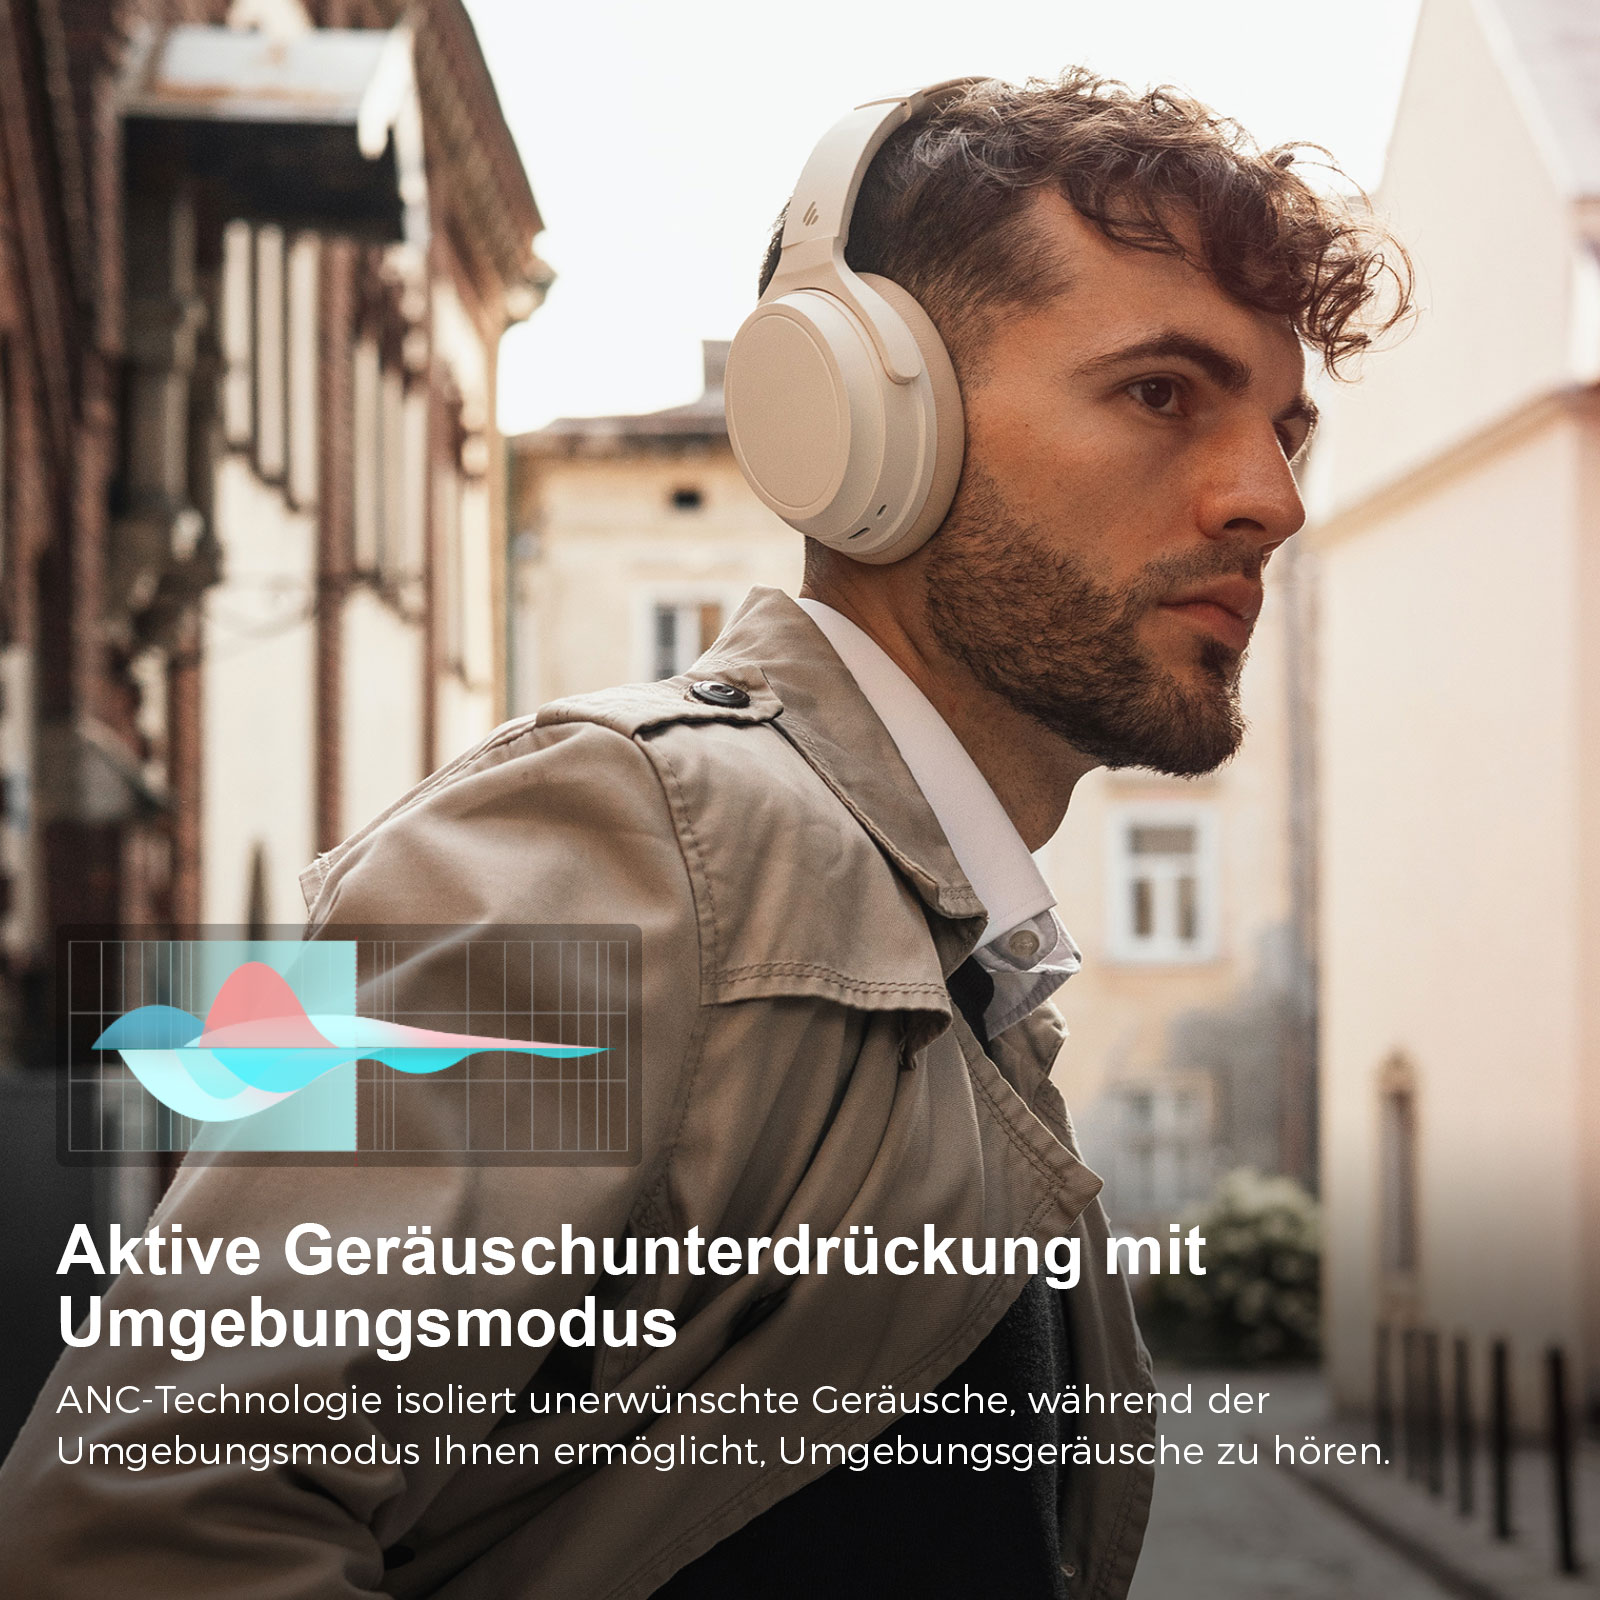 EDIFIER WH700NB, Over-ear Bluetooth-Kopfhörer Elfenbein Bluetooth